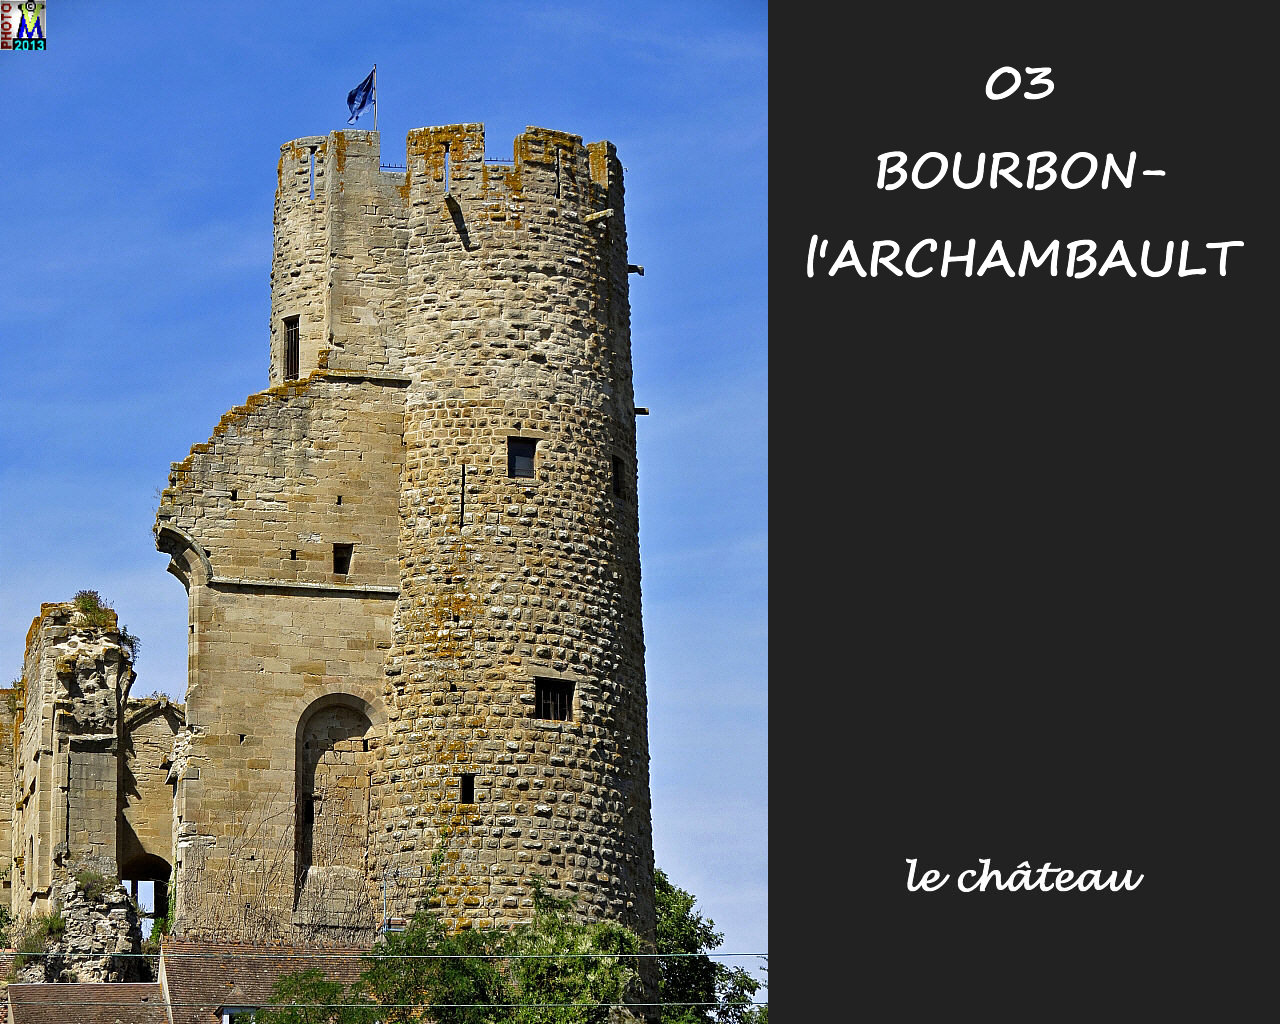 03BOURBON-ARCHAMBAULT_chateau_106.jpg